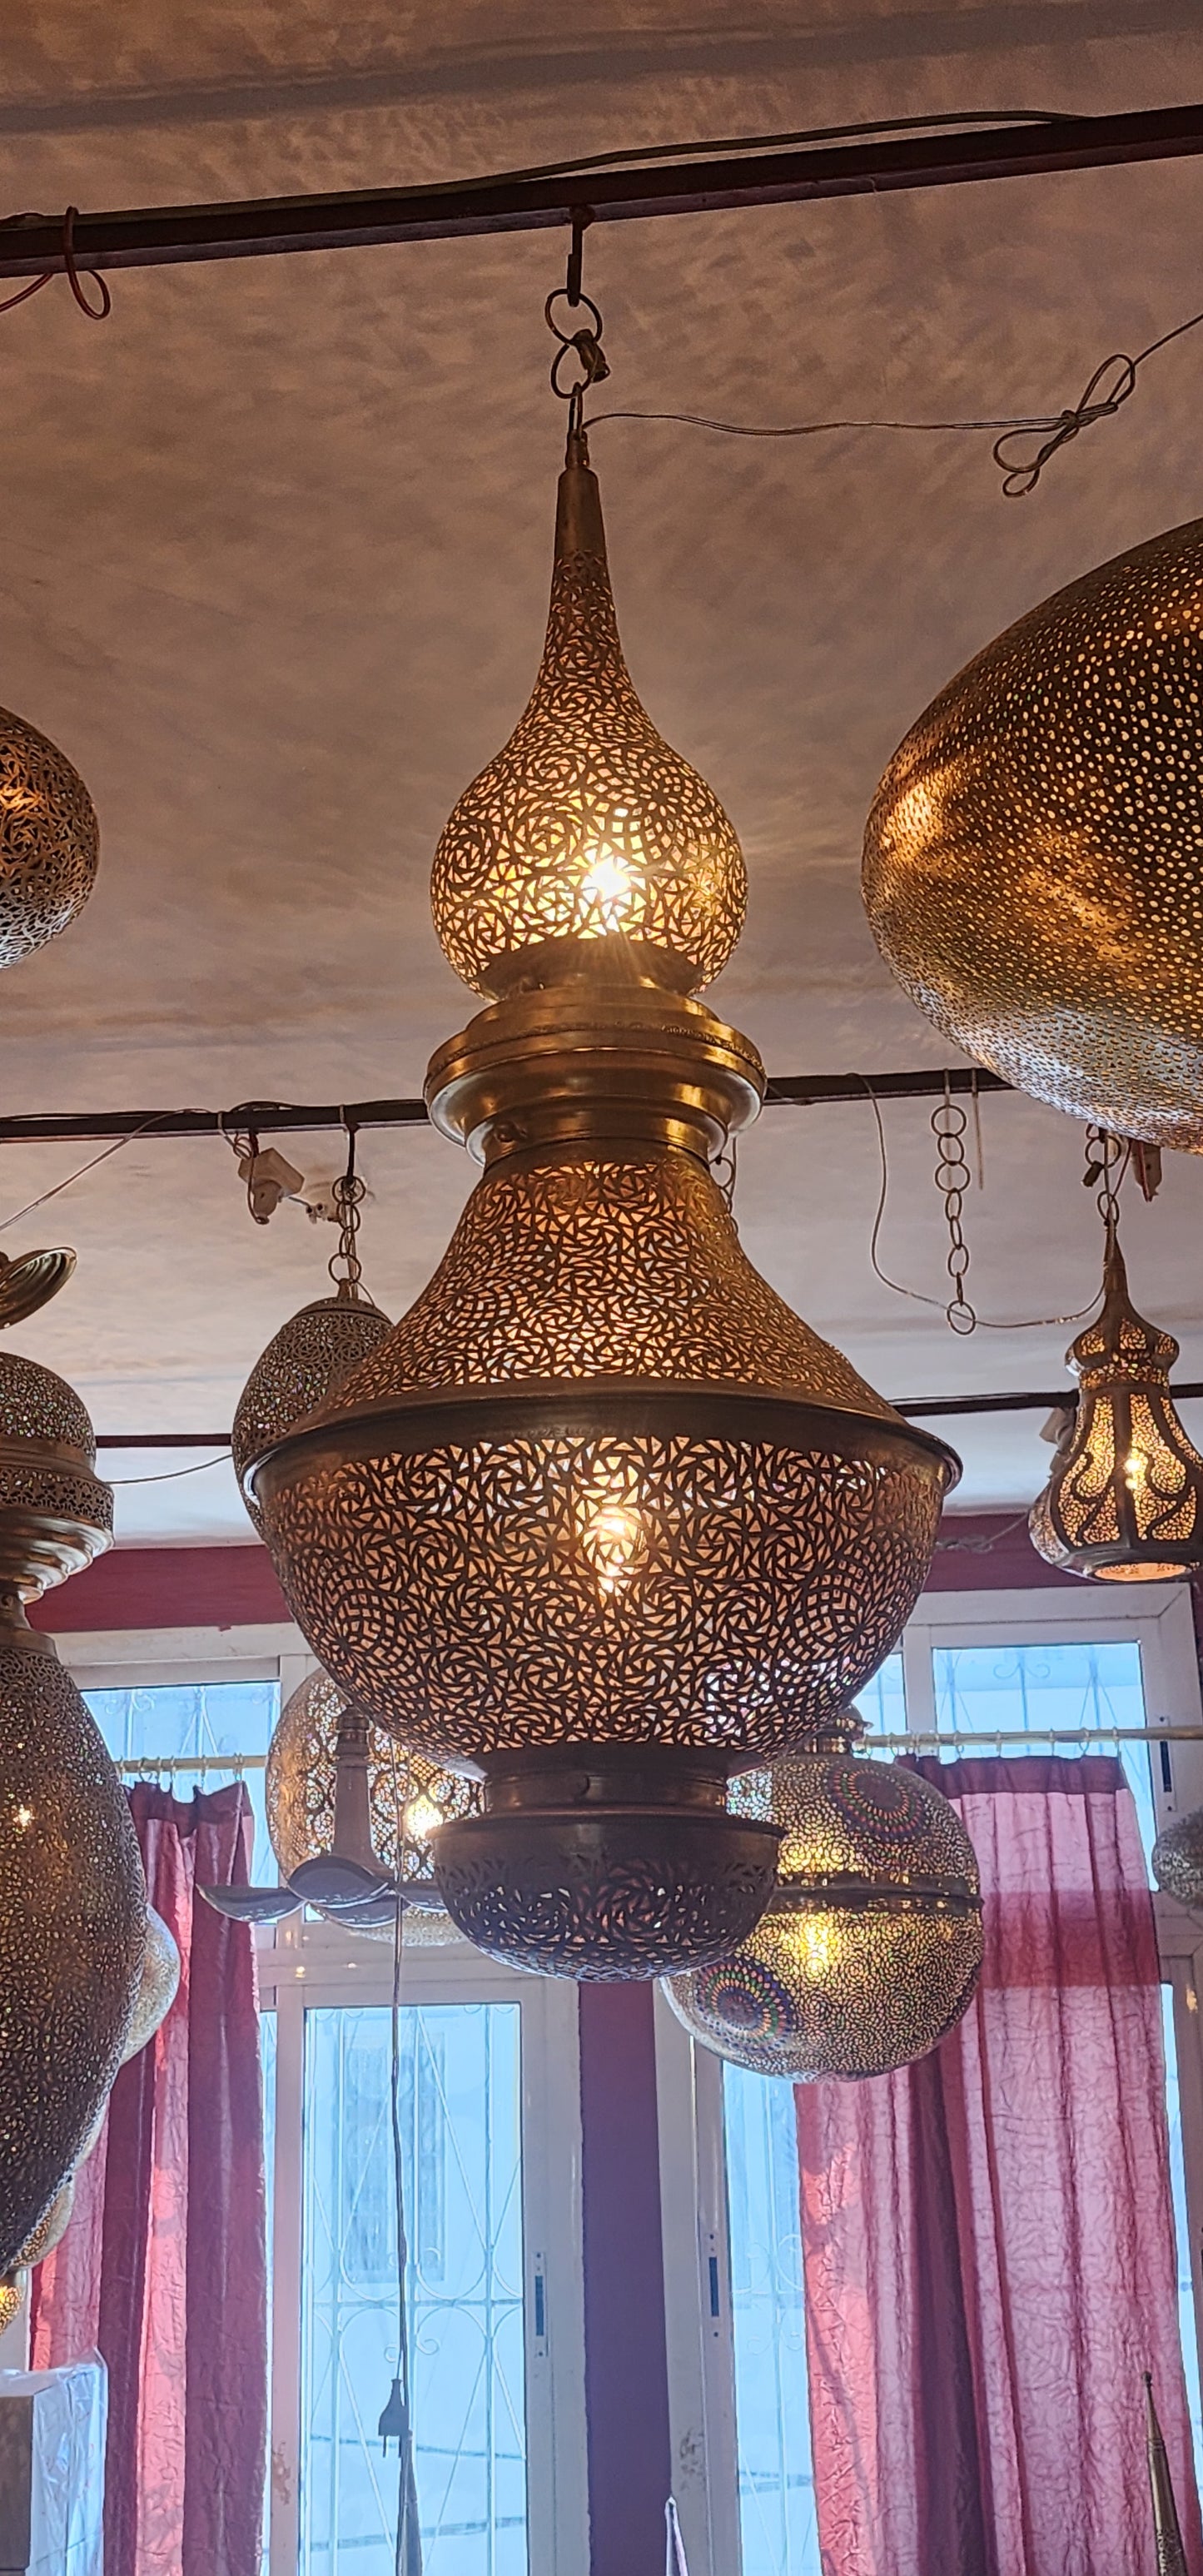 Chandelier, large chandelier, pendant lamp